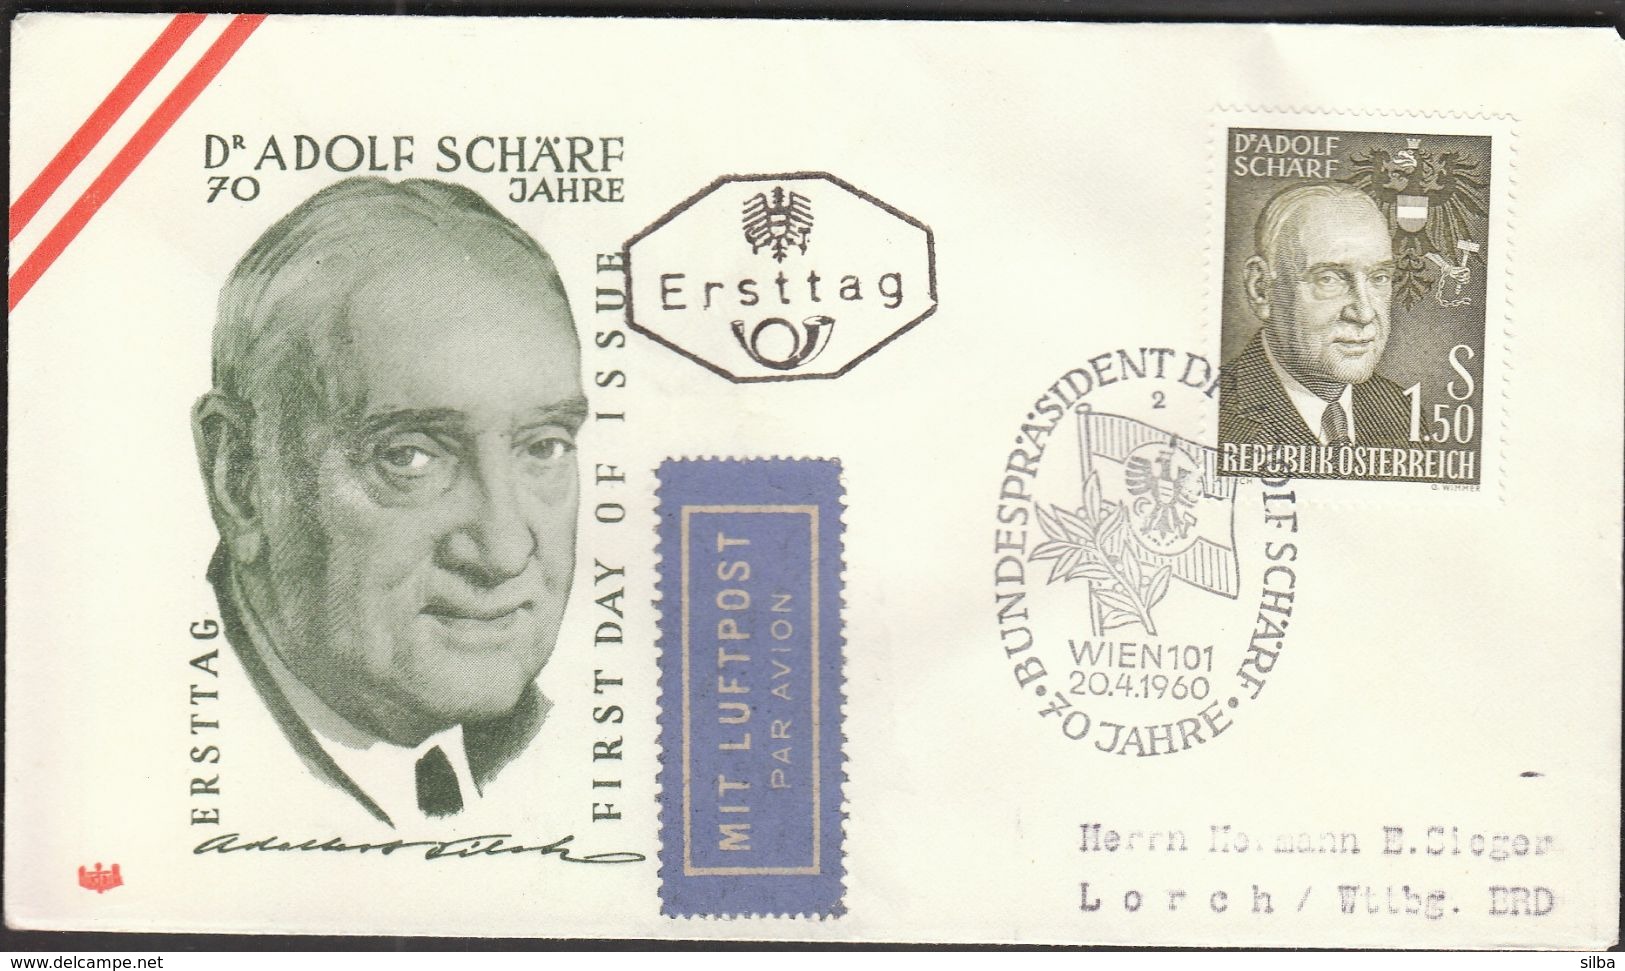 Austria Vienna 1960 / Dr Adolf Scharf / Cancel No. 2 / FDC - FDC